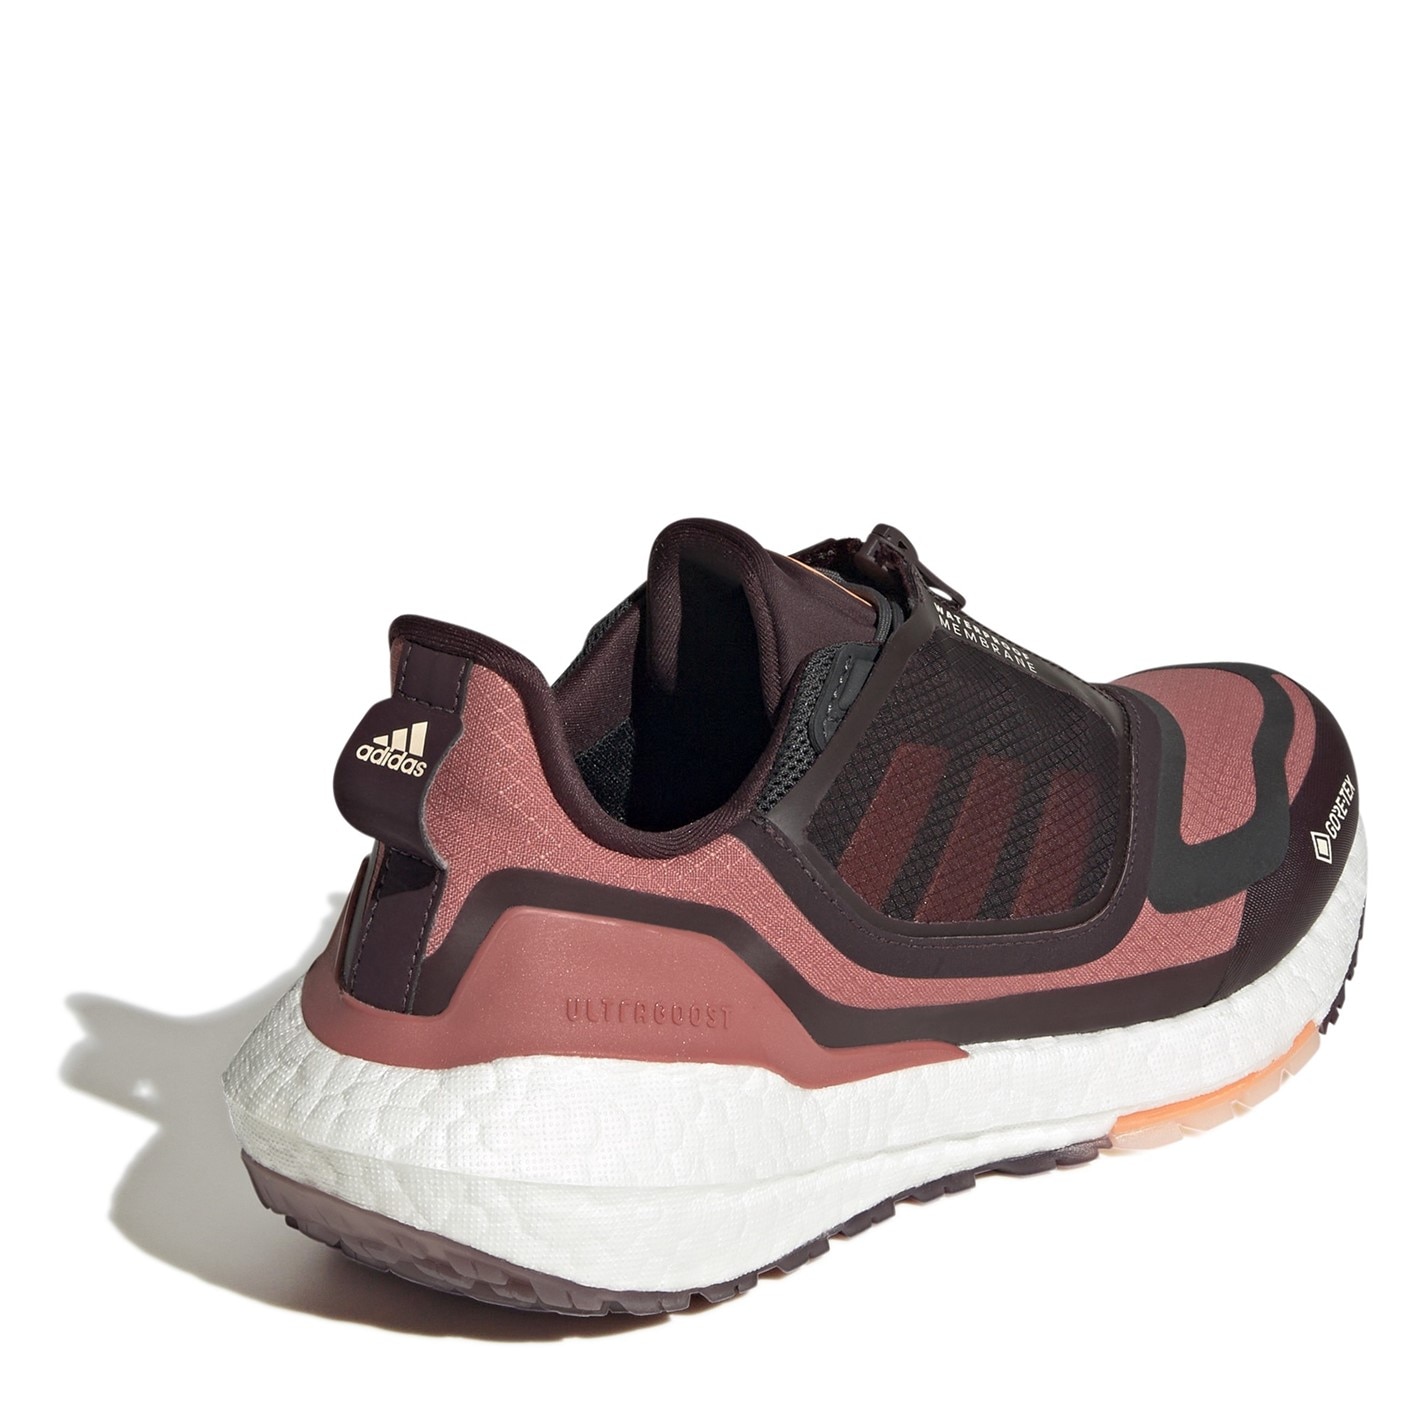 adidas Ultraboost 22 GORE-TEX alergare Shoes pentru femei maro inchis alb